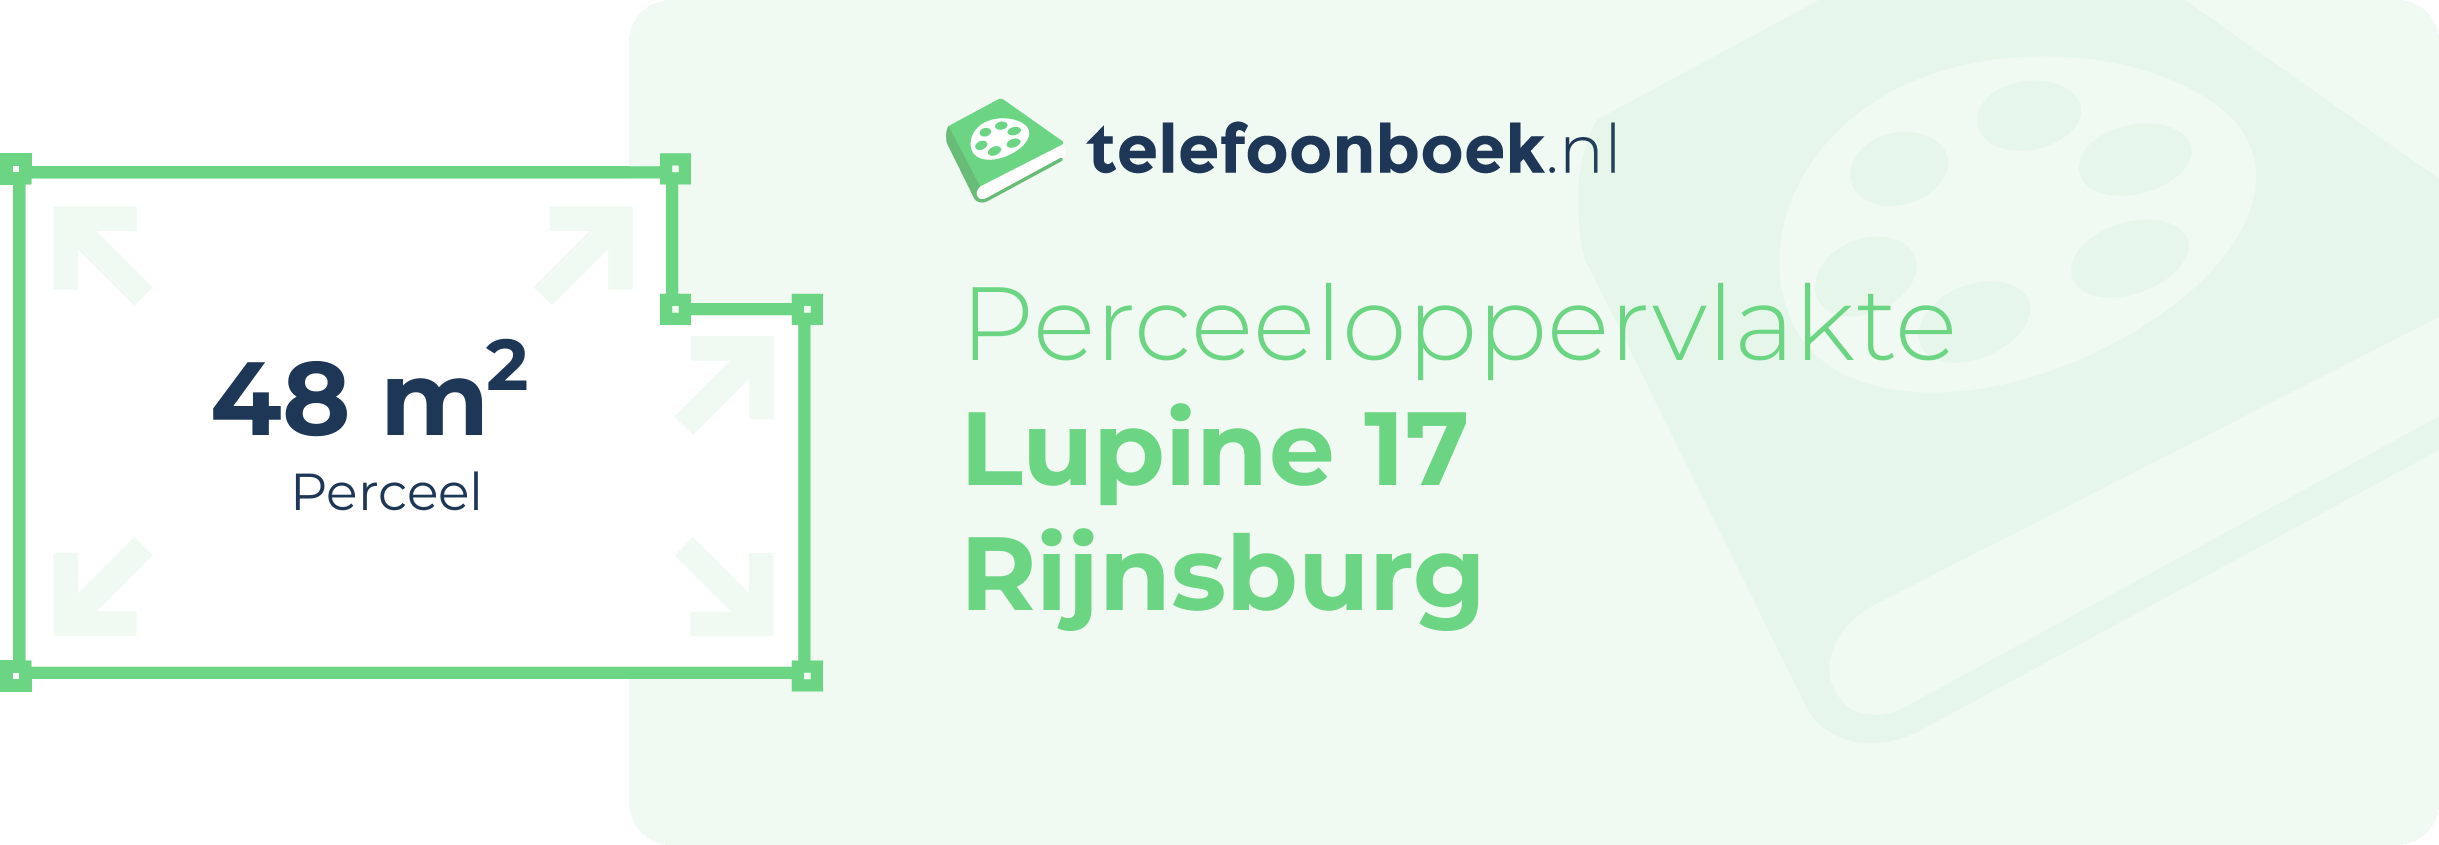 Perceeloppervlakte Lupine 17 Rijnsburg